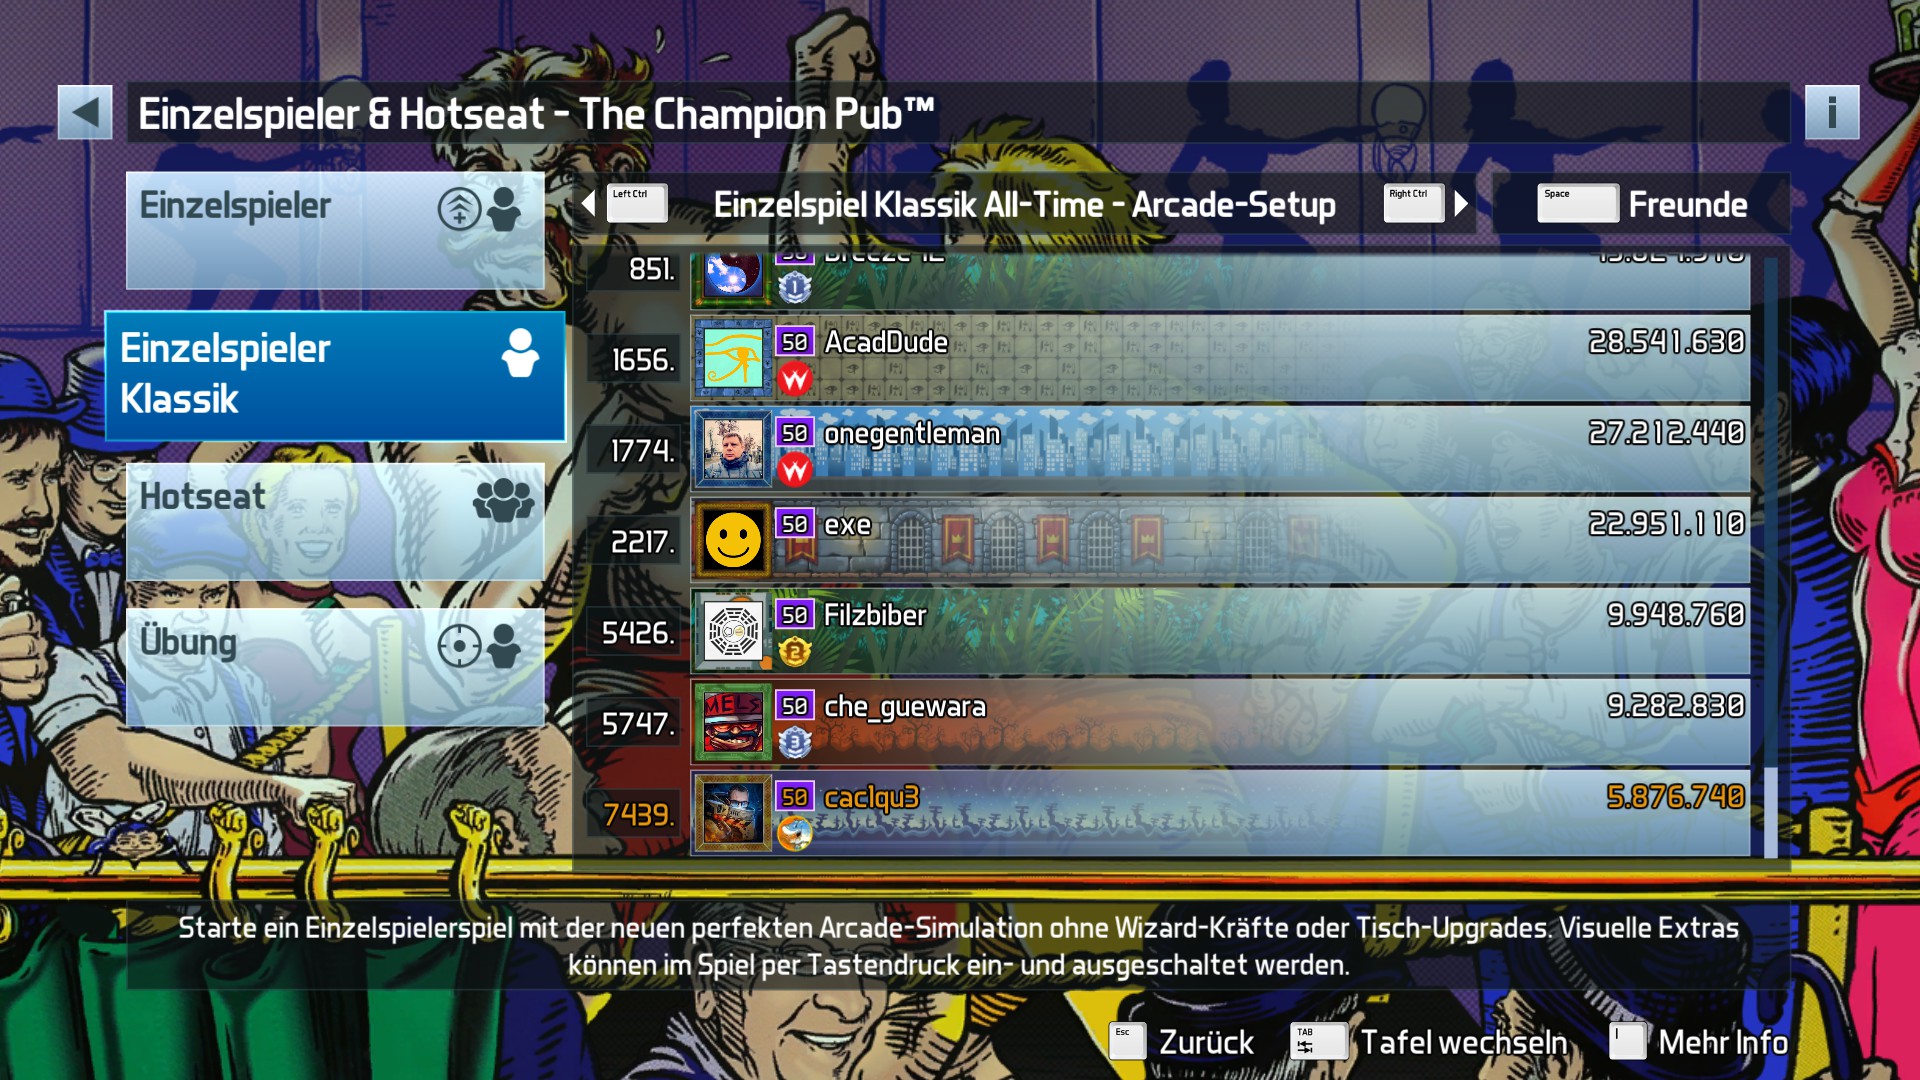 e2e4: Pinball FX3: The Champion Pub [Arcade] (PC) 5,876,740 points on 2022-06-26 11:56:38